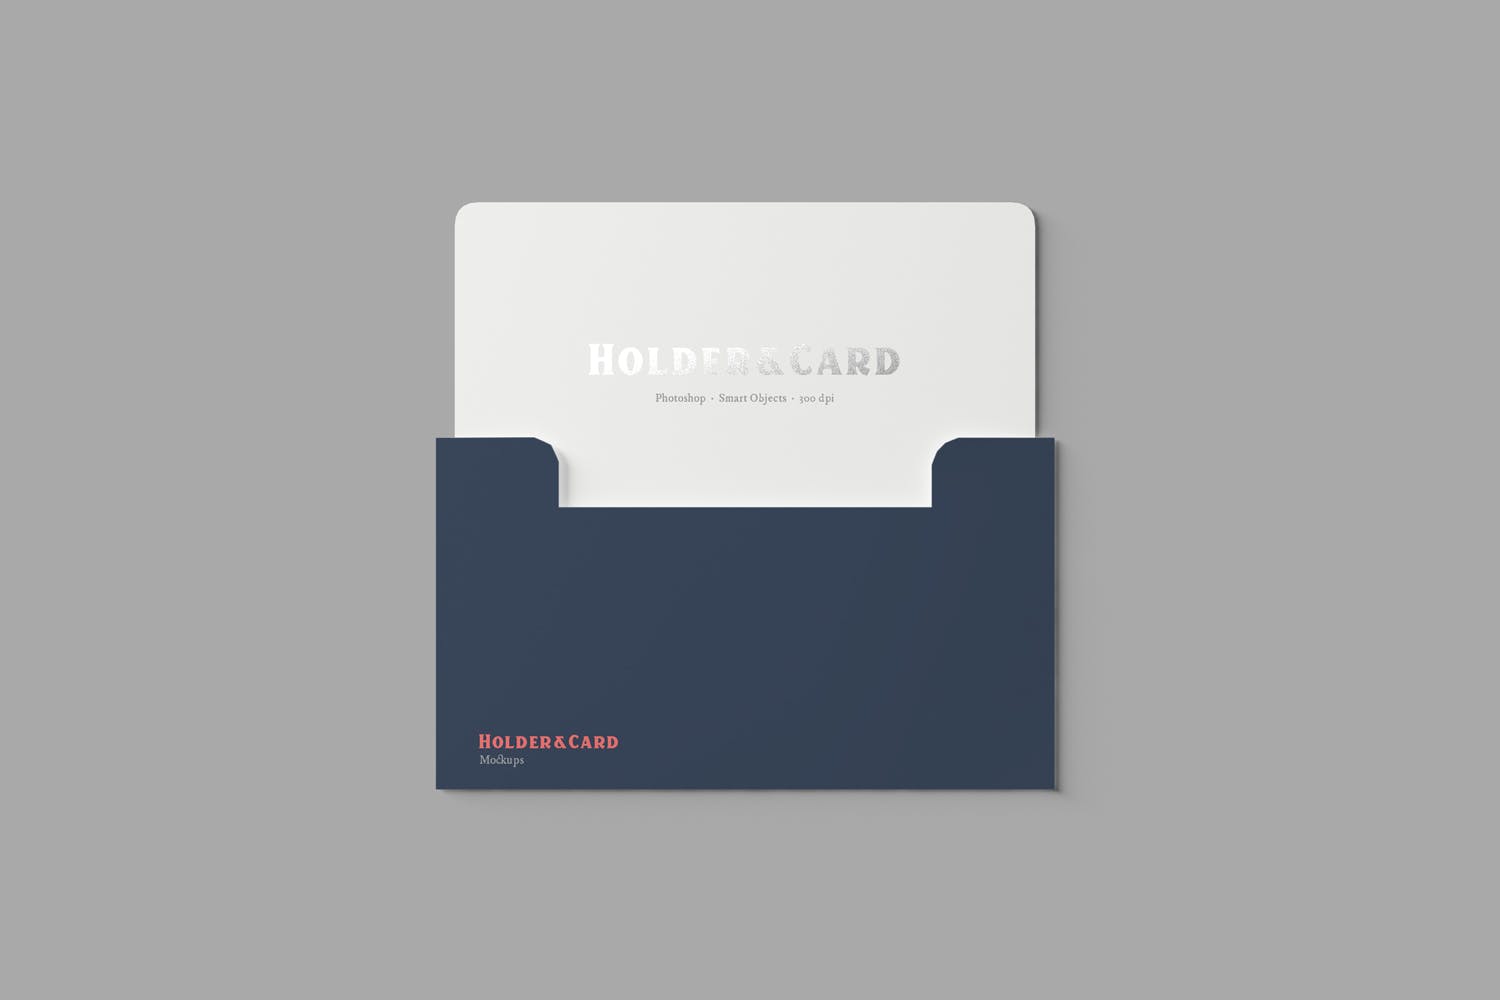 卡片&卡套设计效果图第一素材精选 Holder and Card Mockups插图(4)